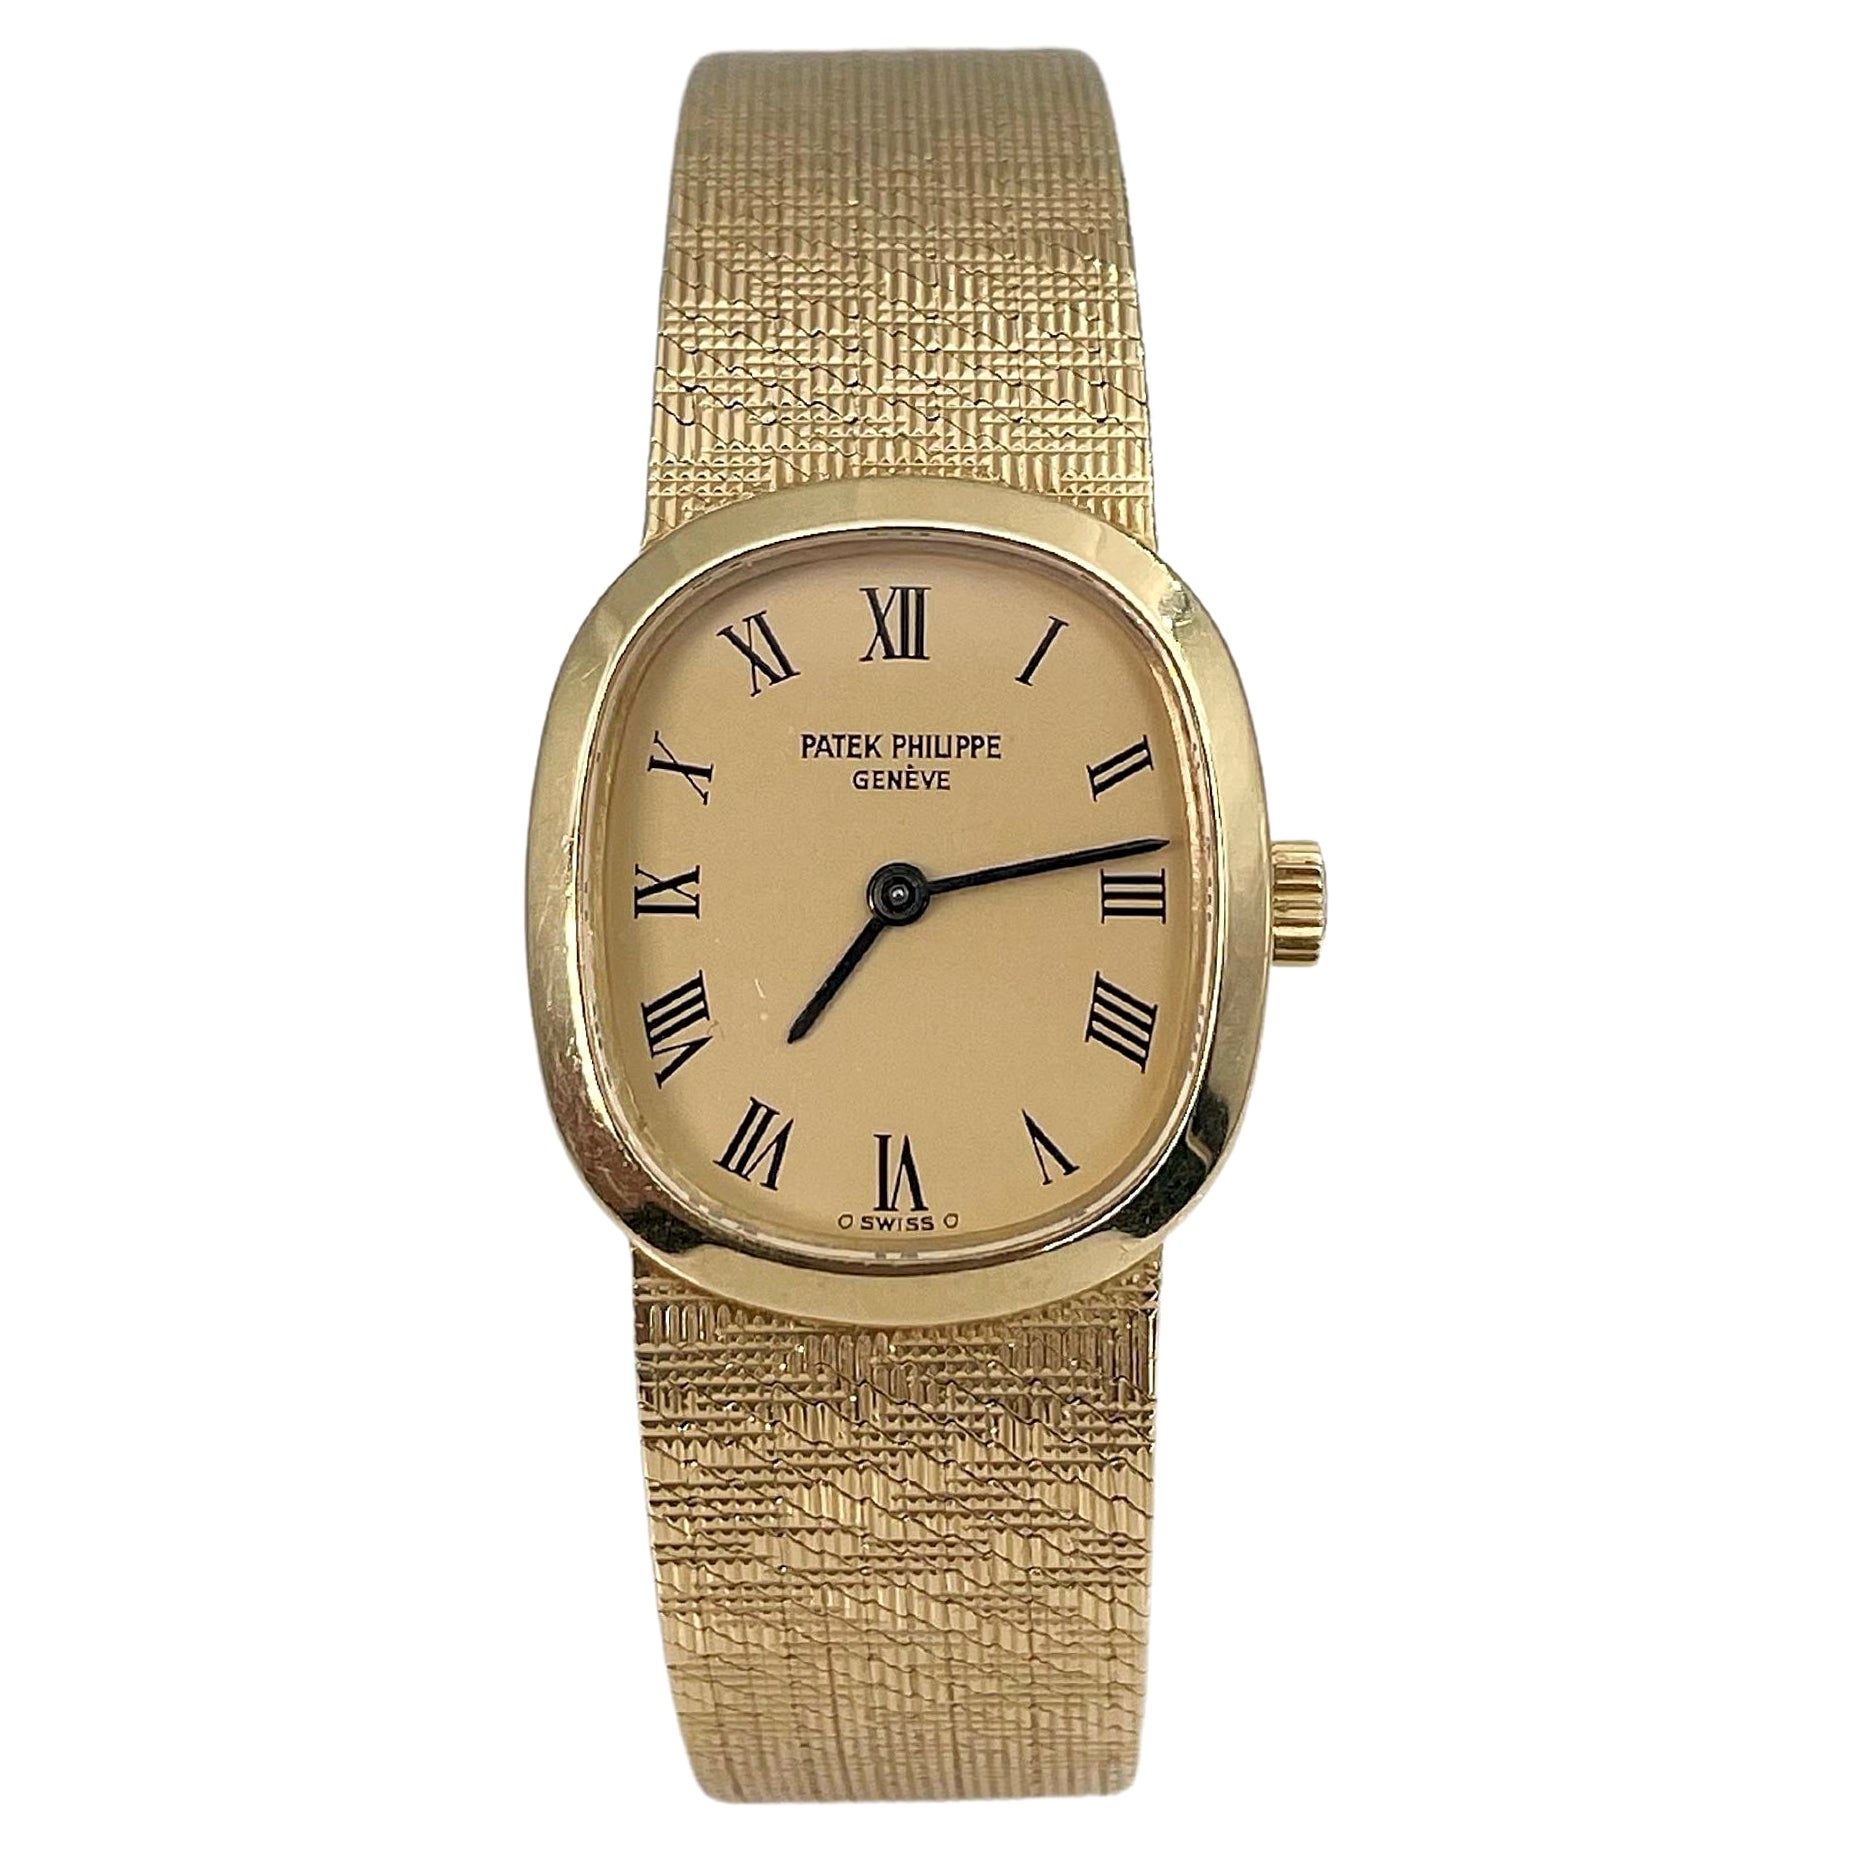 1970s Patek Philippe 18 Karat Yellow Gold Model 4132/1 Wrist Watch